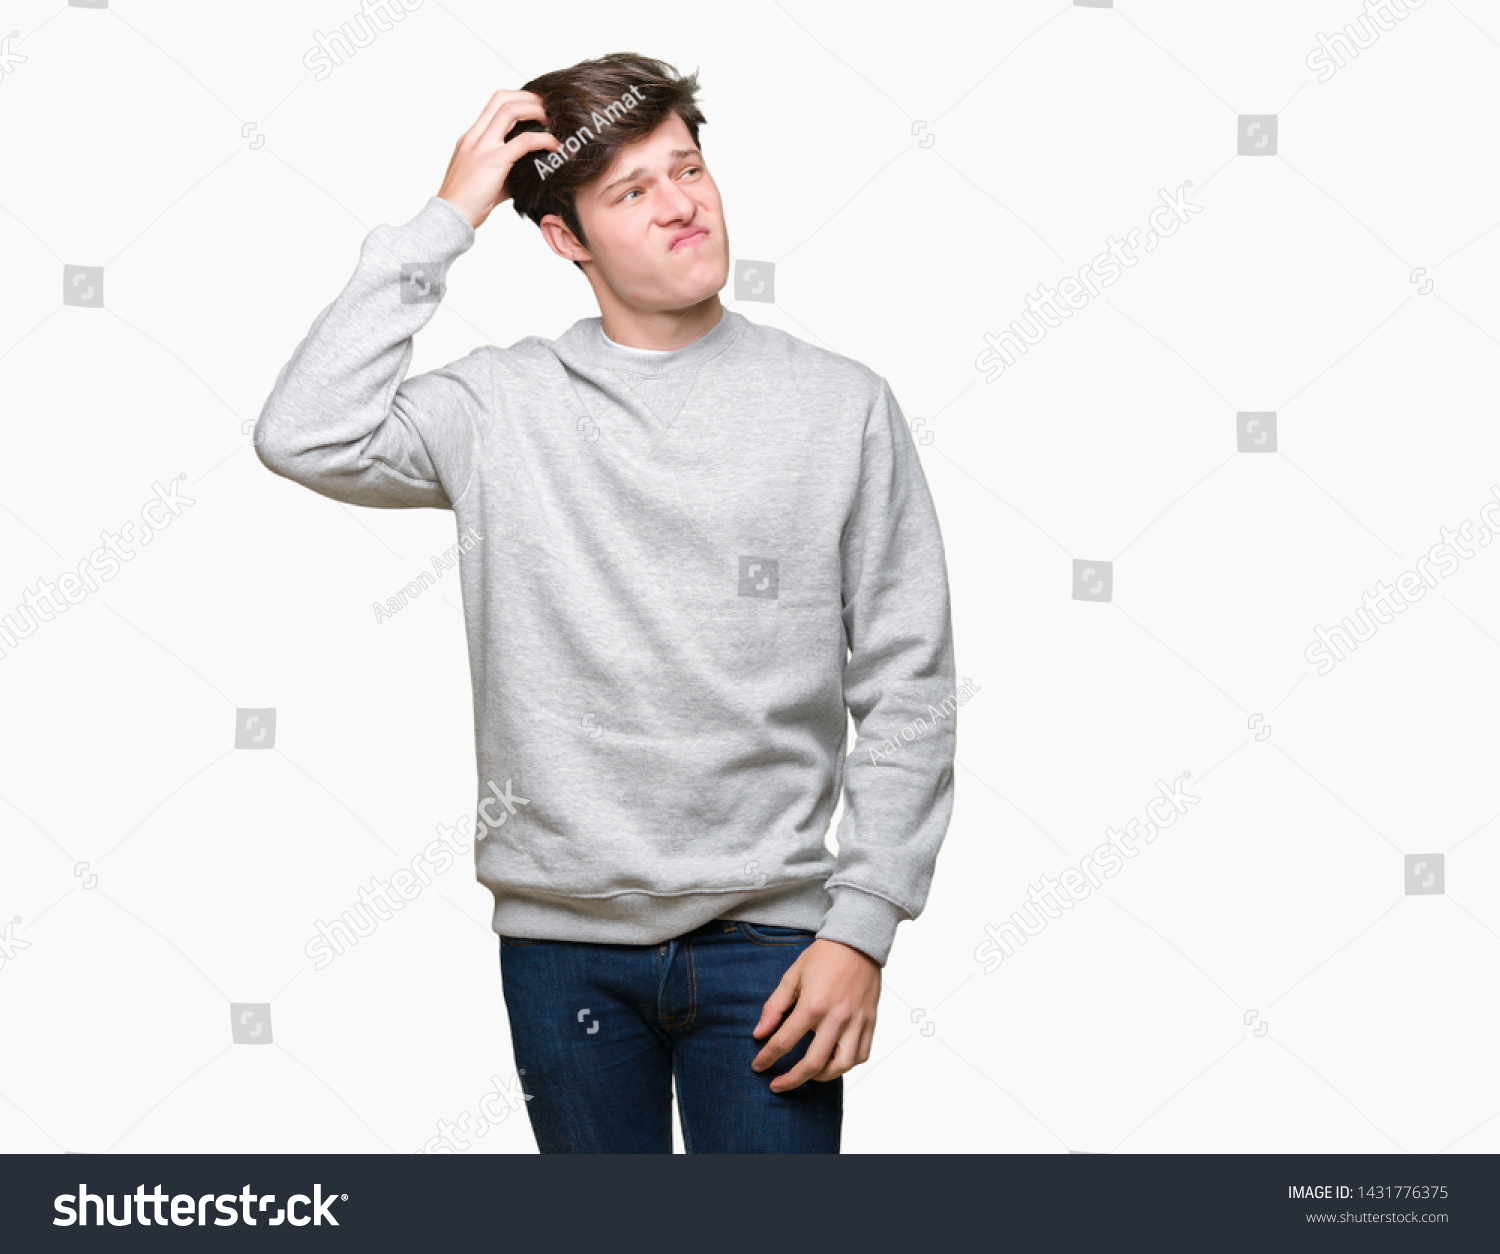 man wearing sweatshirt